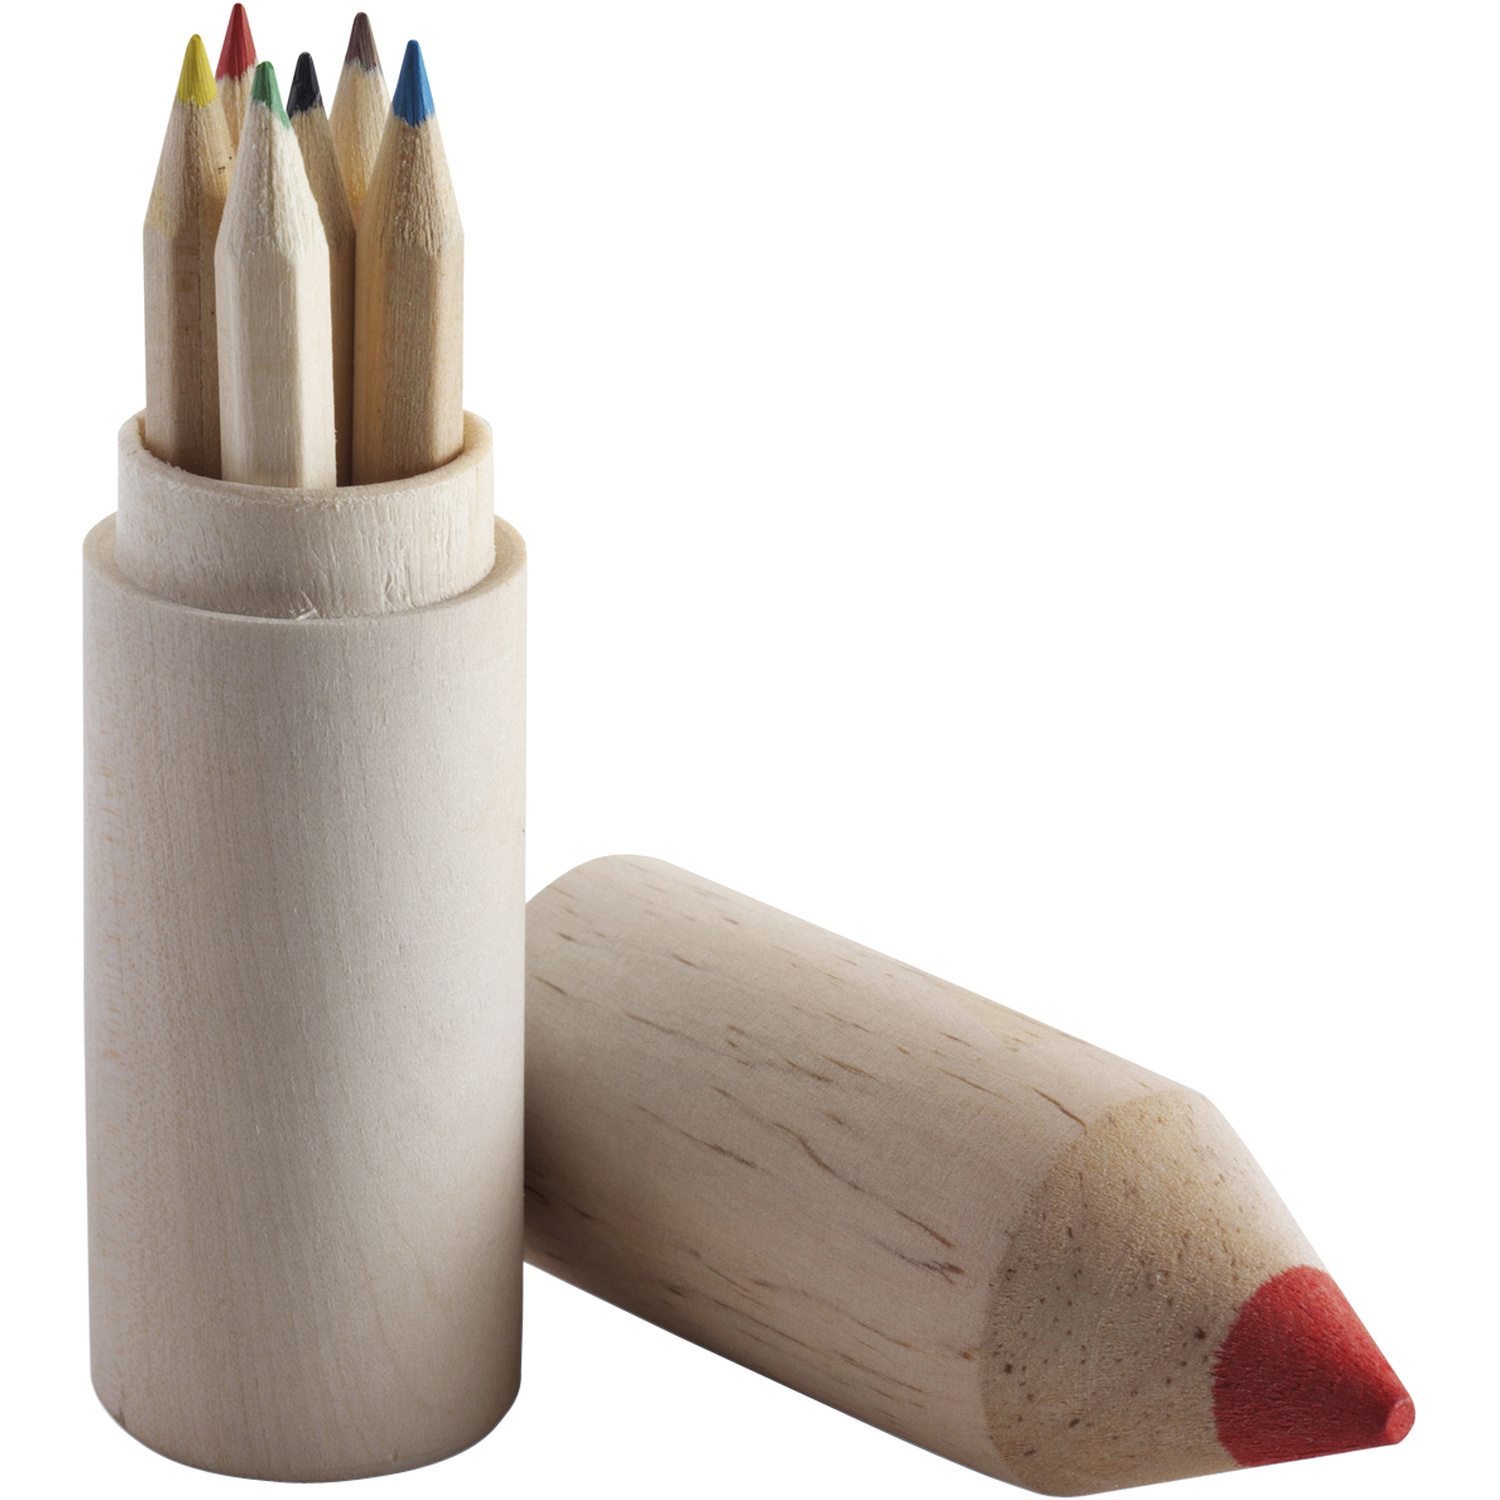 002786 011999999 3d090 gbo pro01 fal - Coloured pencil & crayon set (12pc)